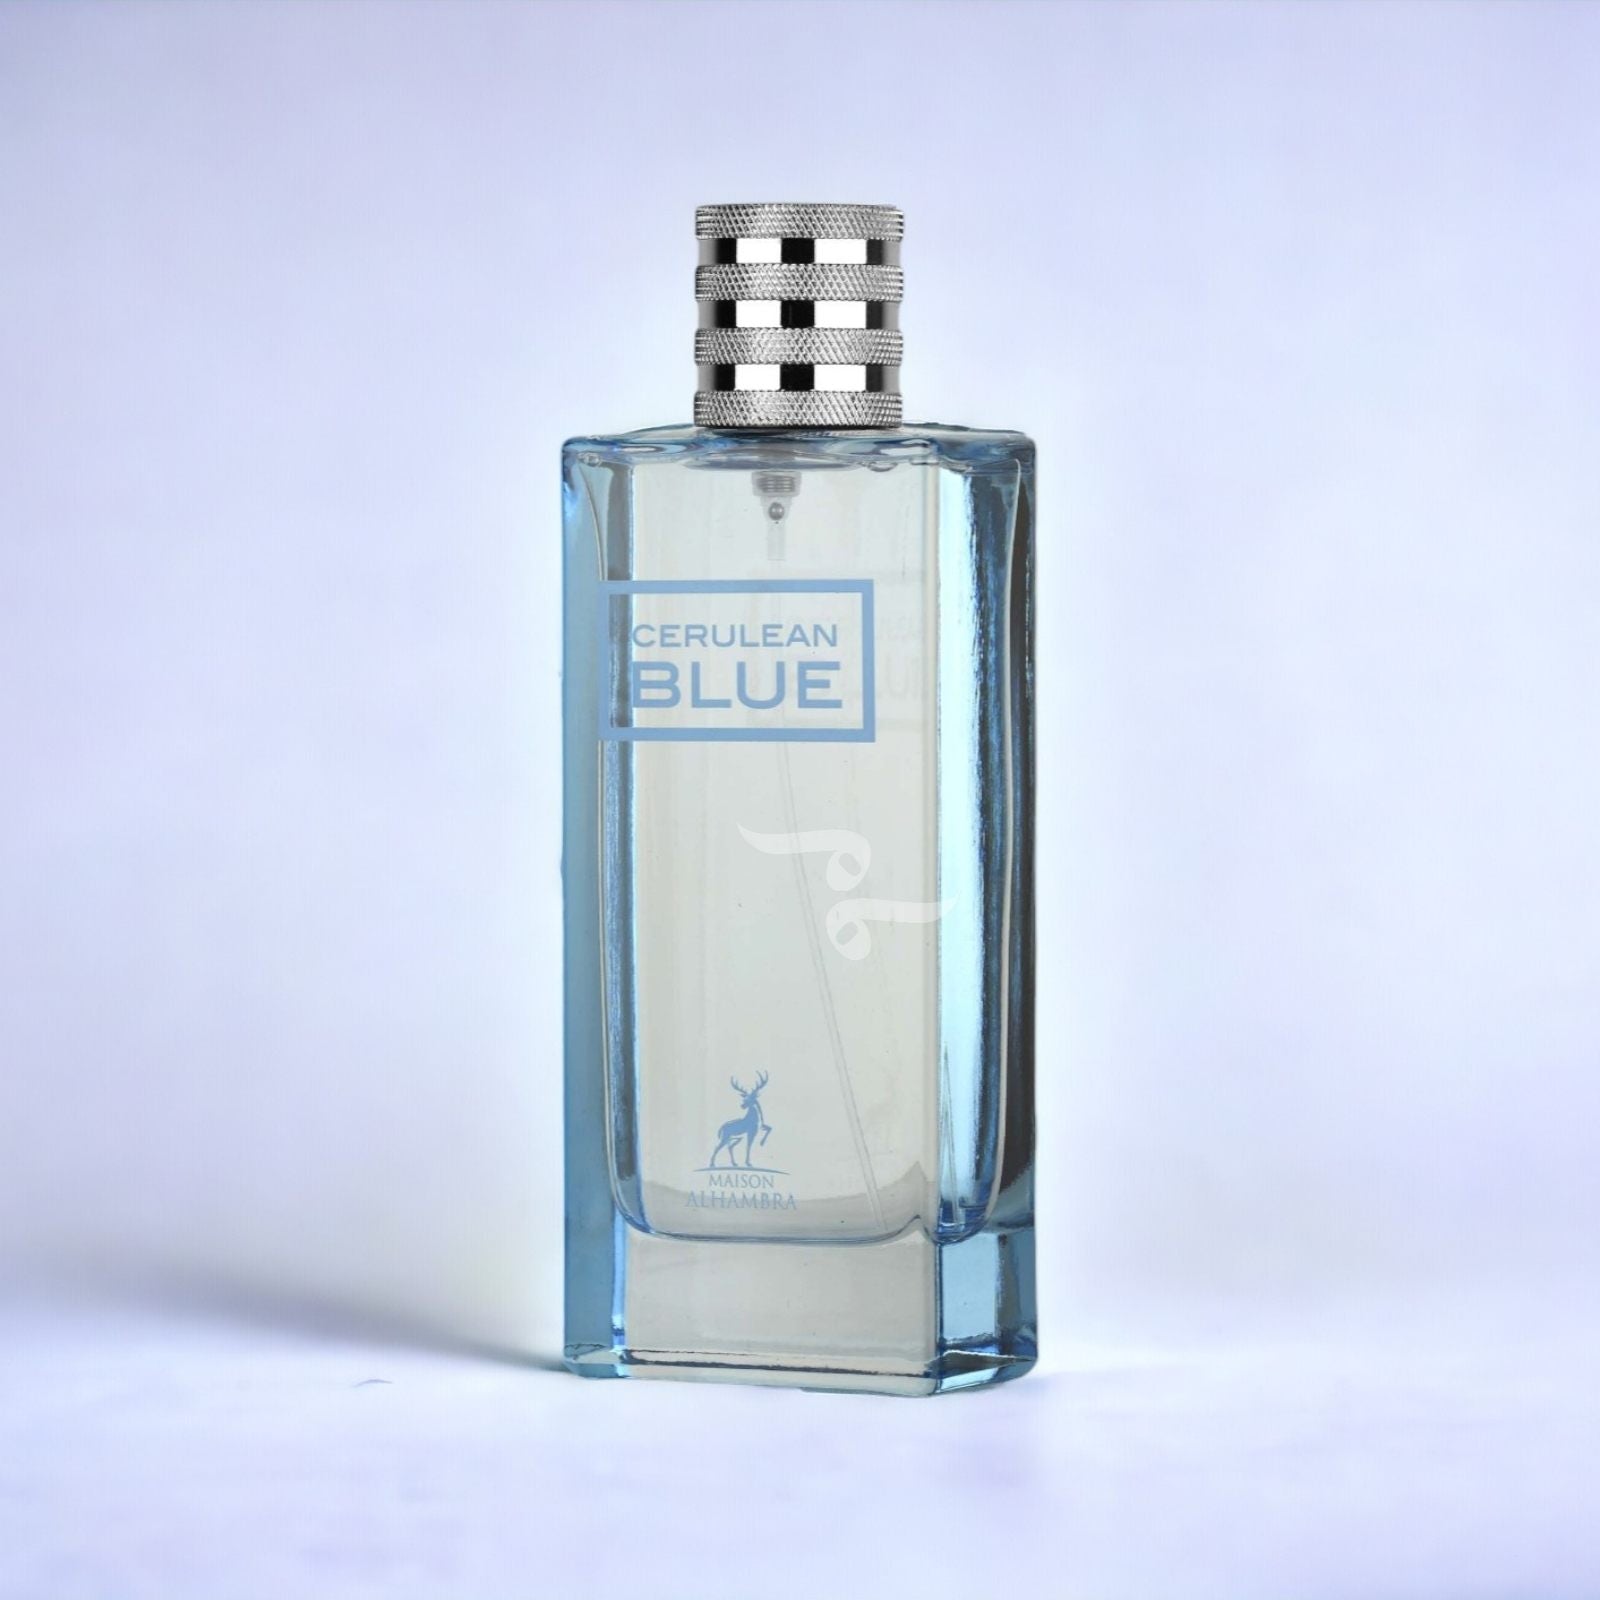 Cerulean blue 100ml by Maison Alhambra